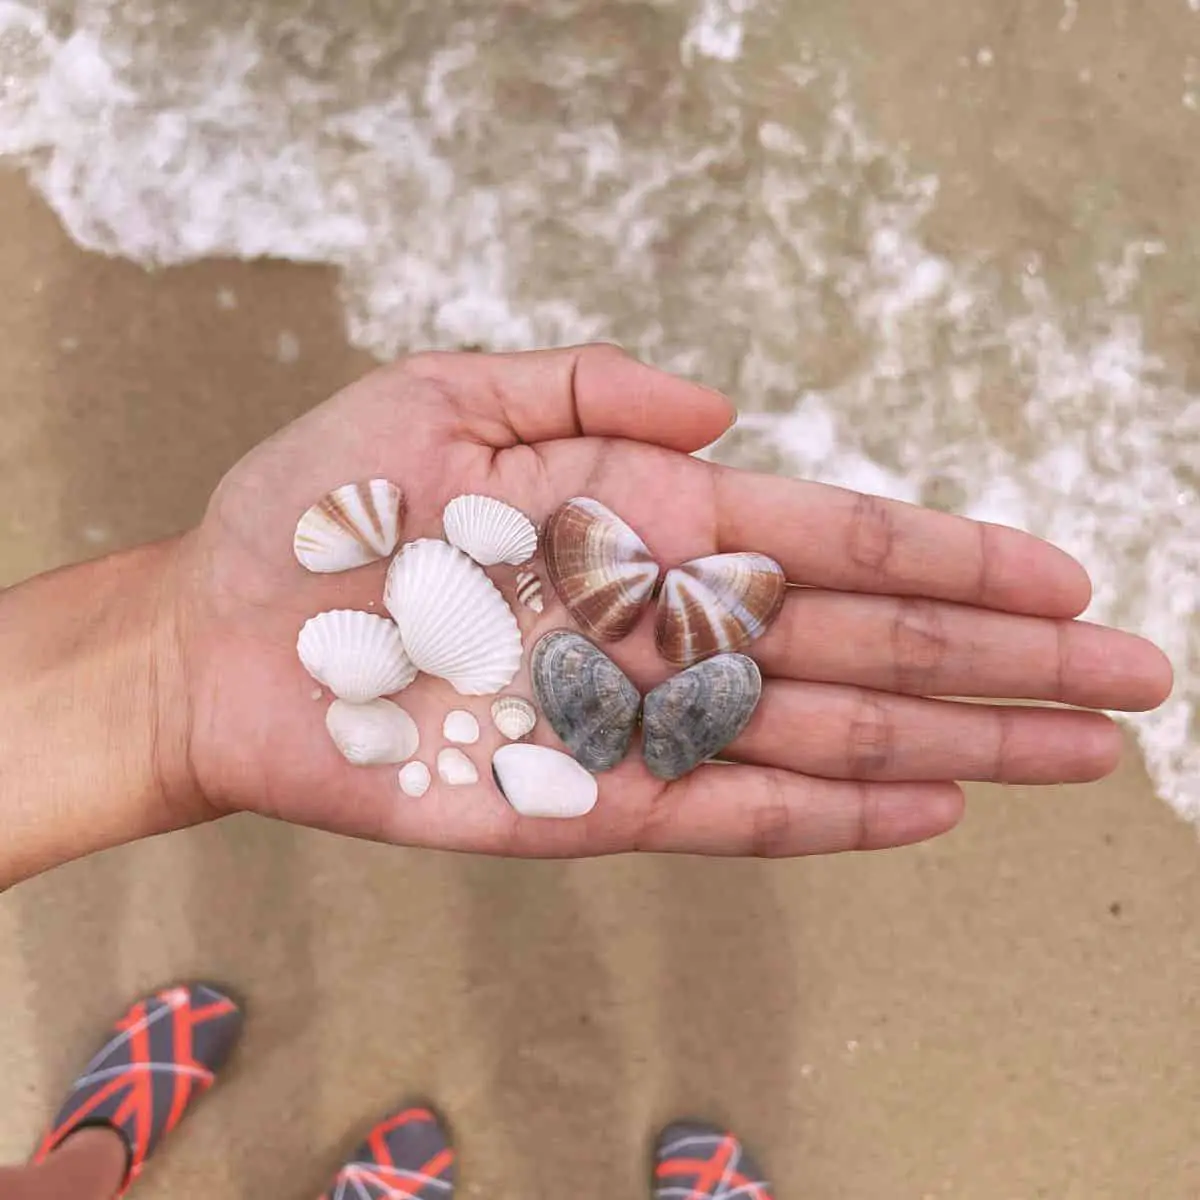 Pretty seashells can be found along the seashore